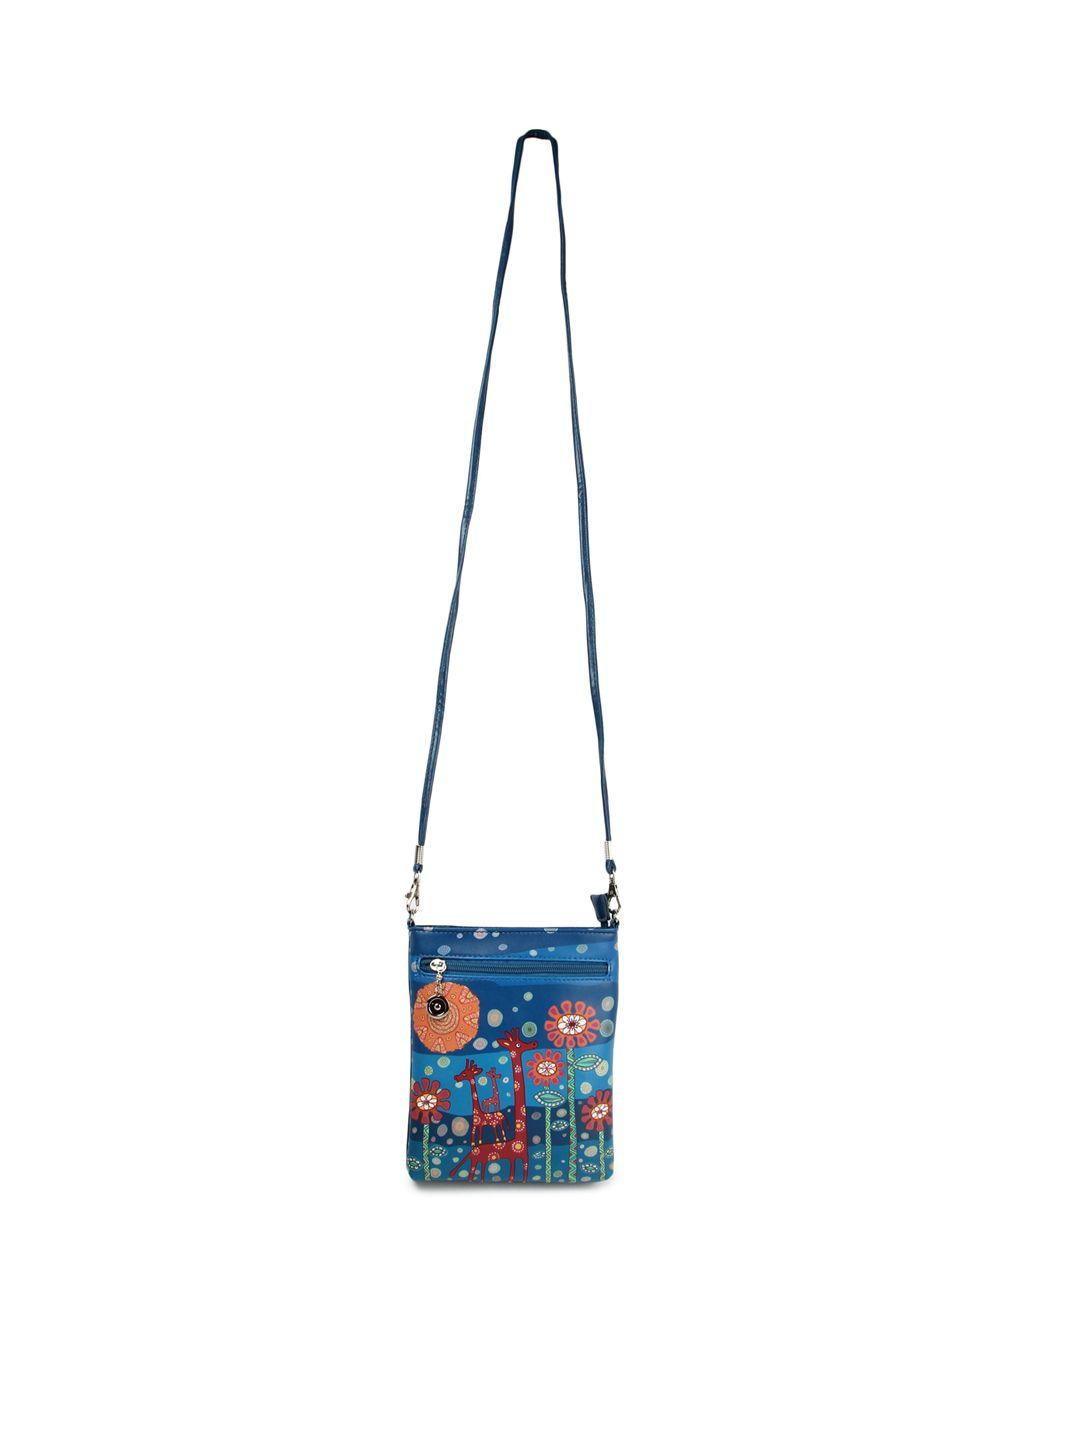 instabuyz blue floral printed pu shopper sling bag